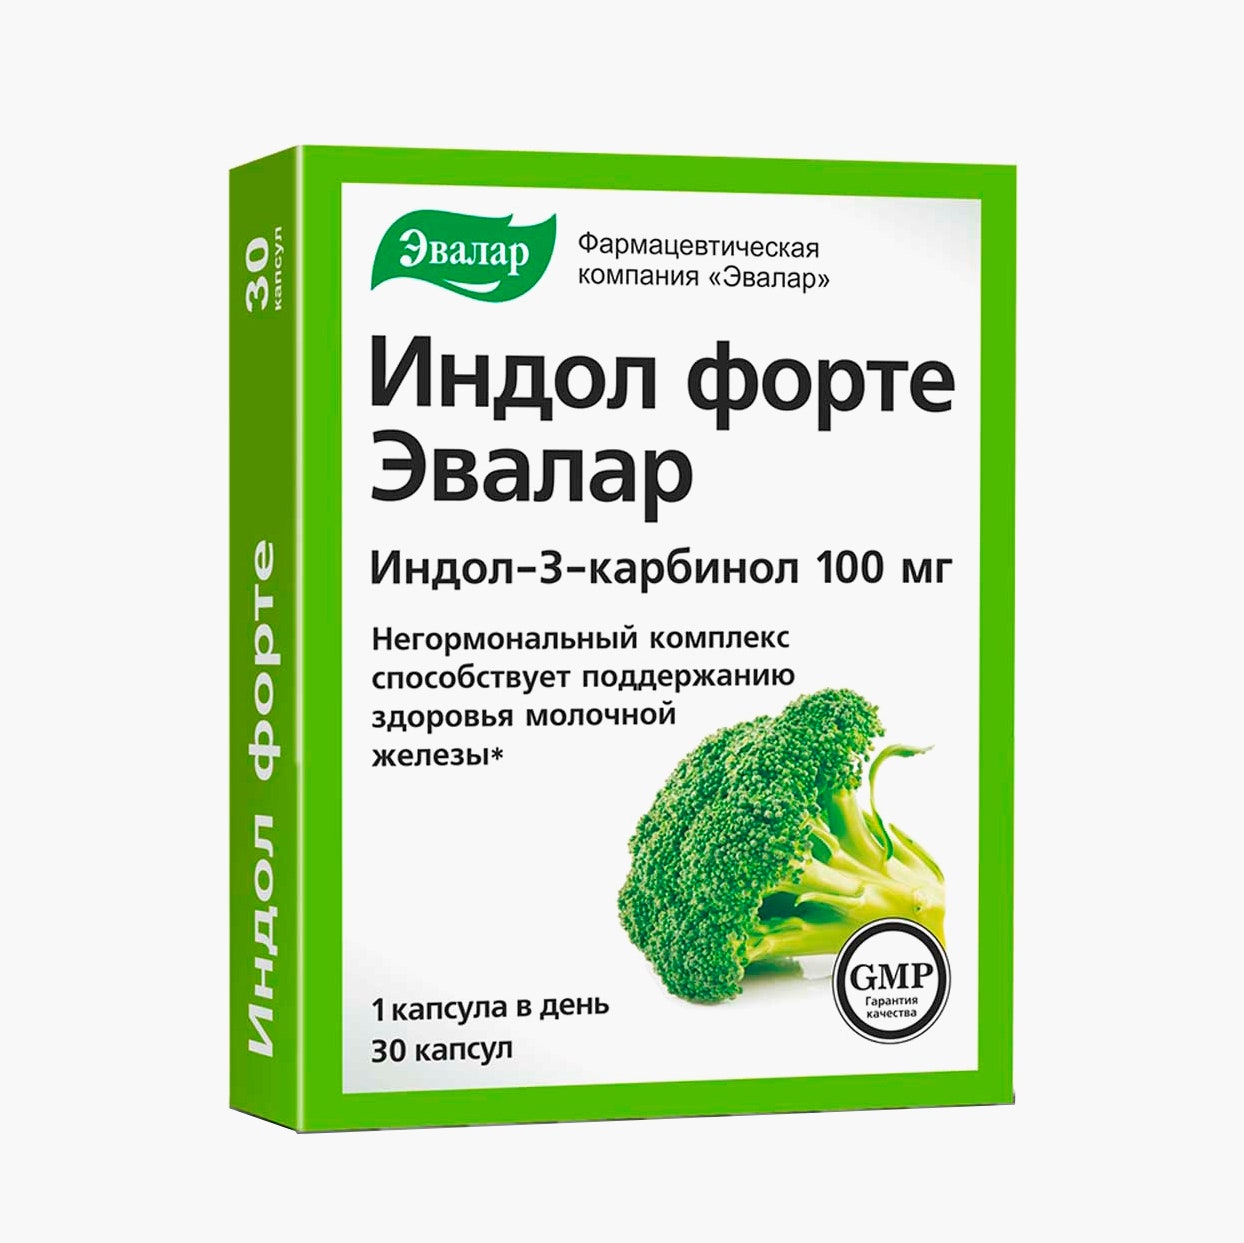 Индол Форте 100 мг «Эвалар» 519 рублей